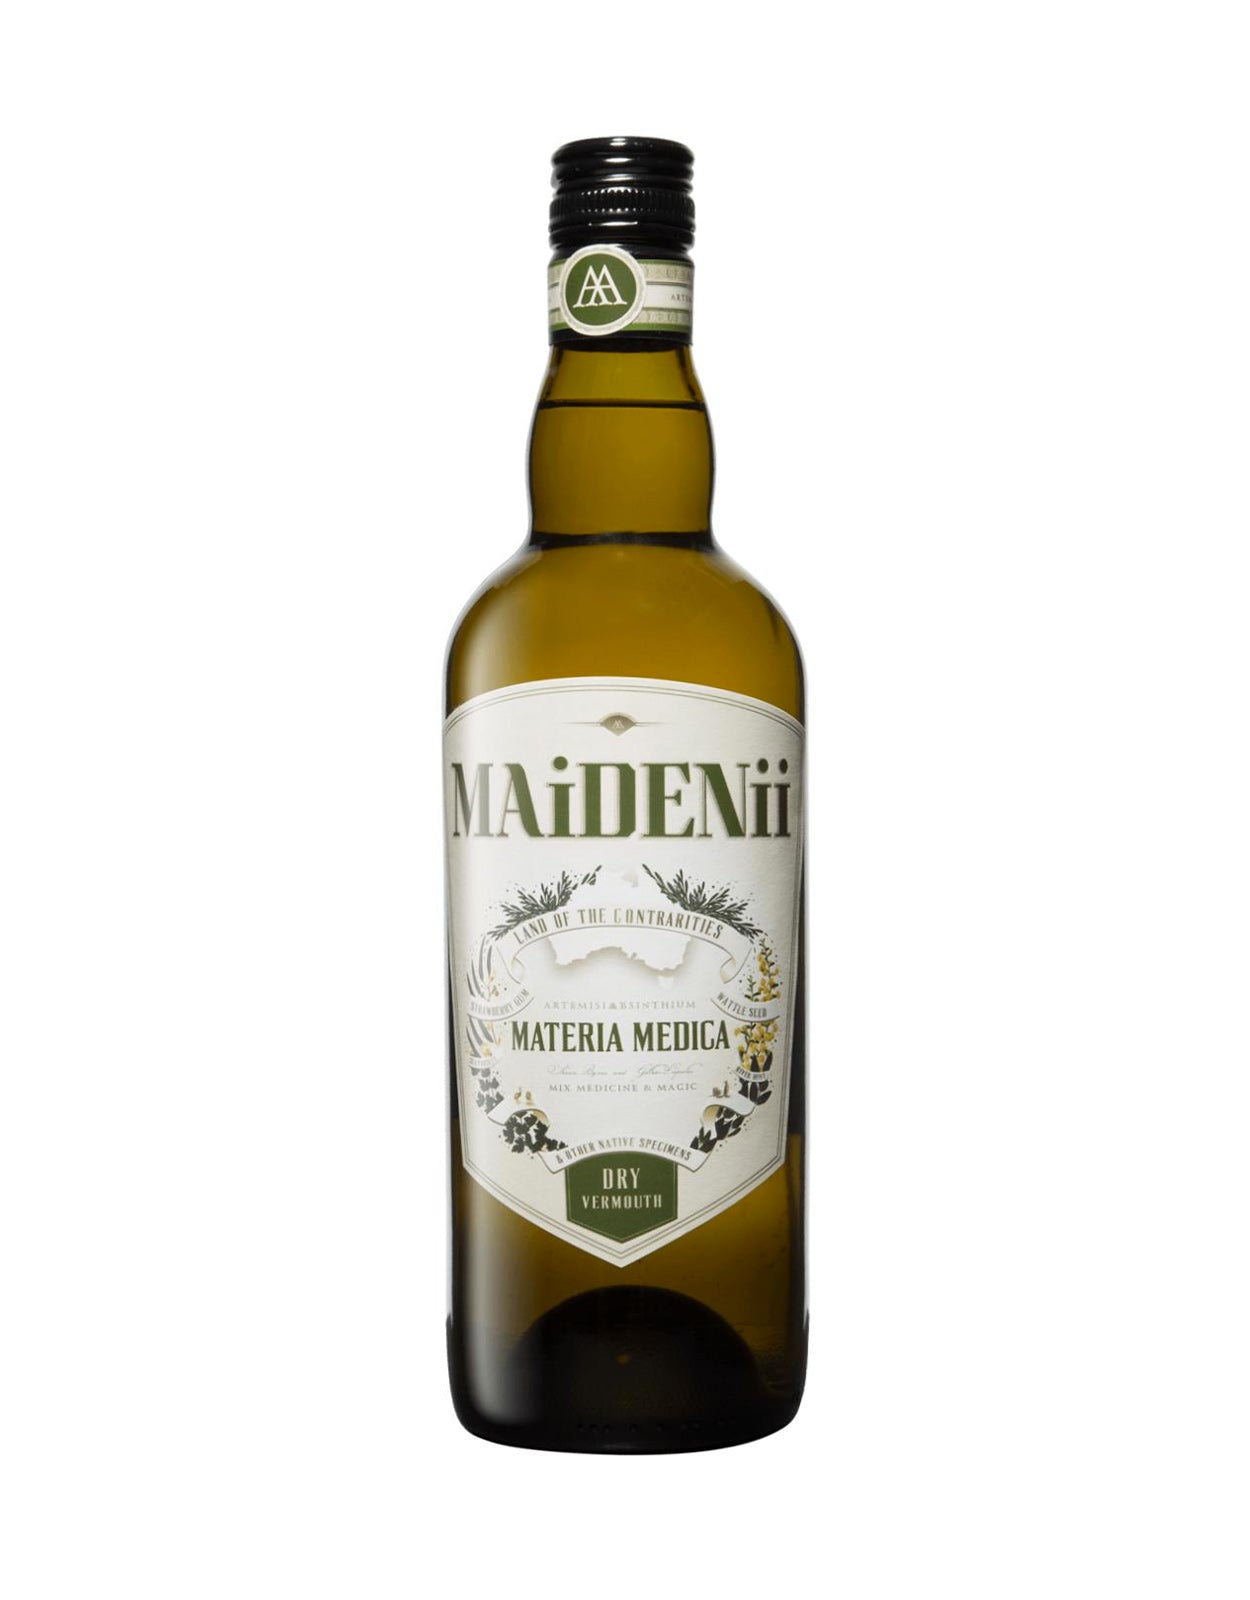 Maidenii Dry Vermouth